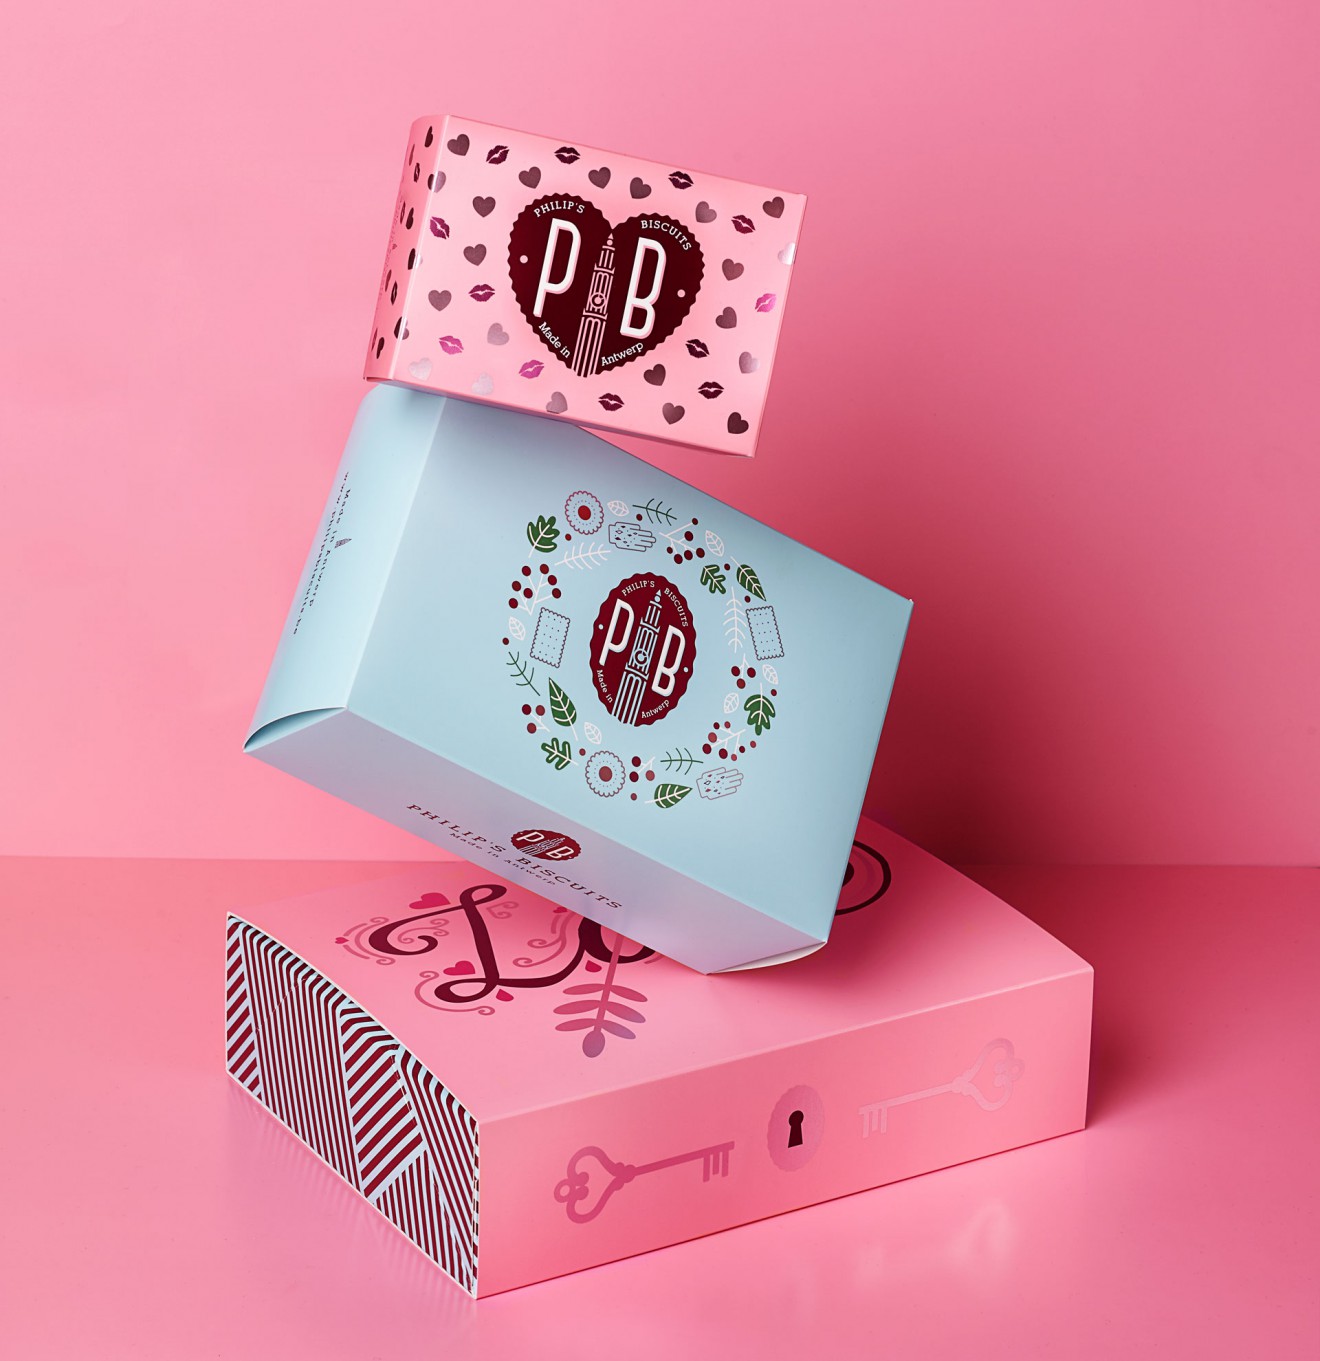 Quatre Mains package design - boxes, packaging design, rebranding